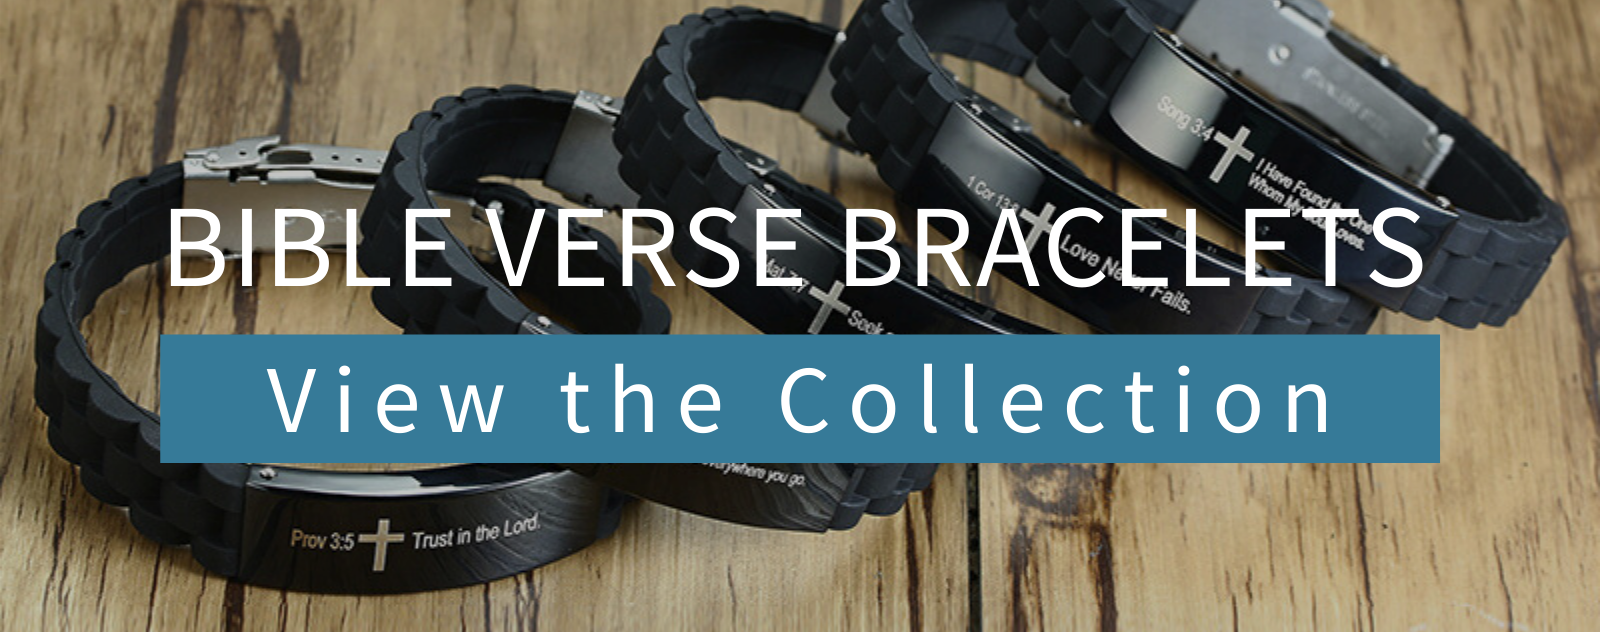 Bible Verse Bracelets Collection